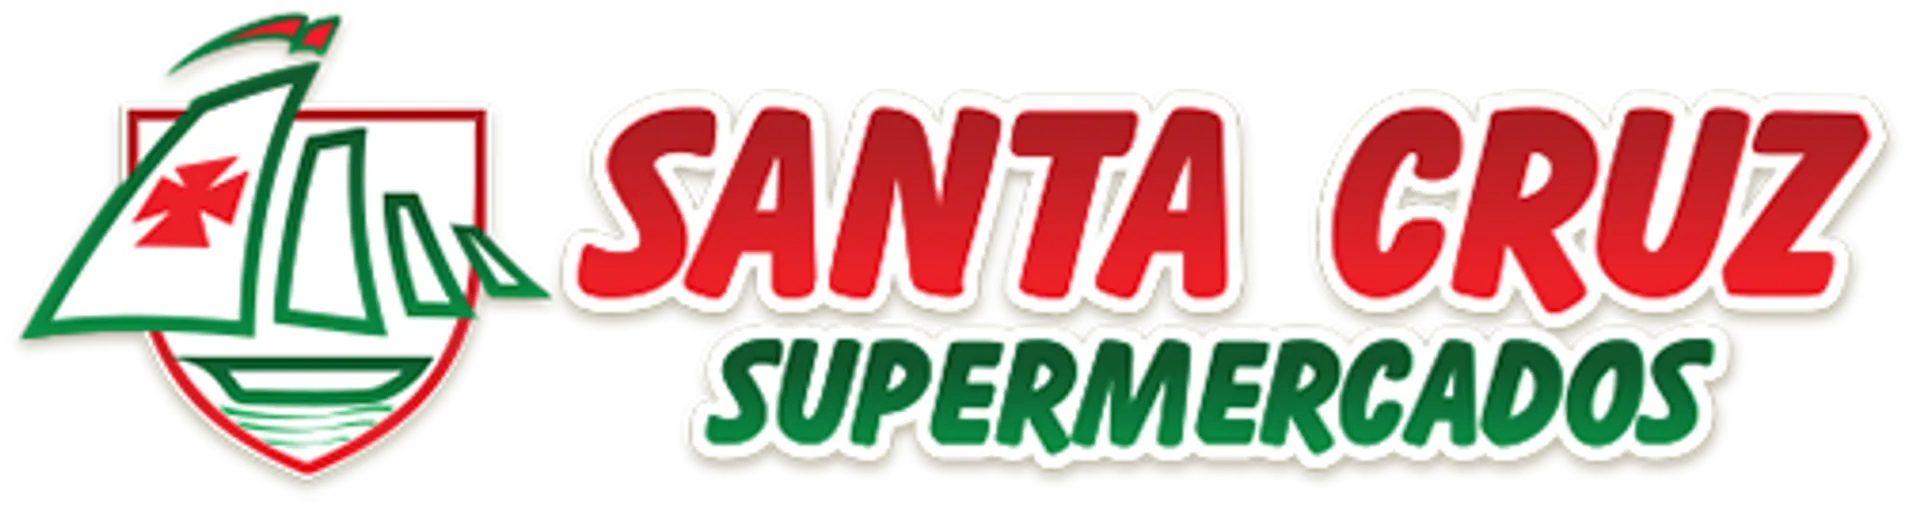 SUPERMERCADOS SANTA CRUZ logo